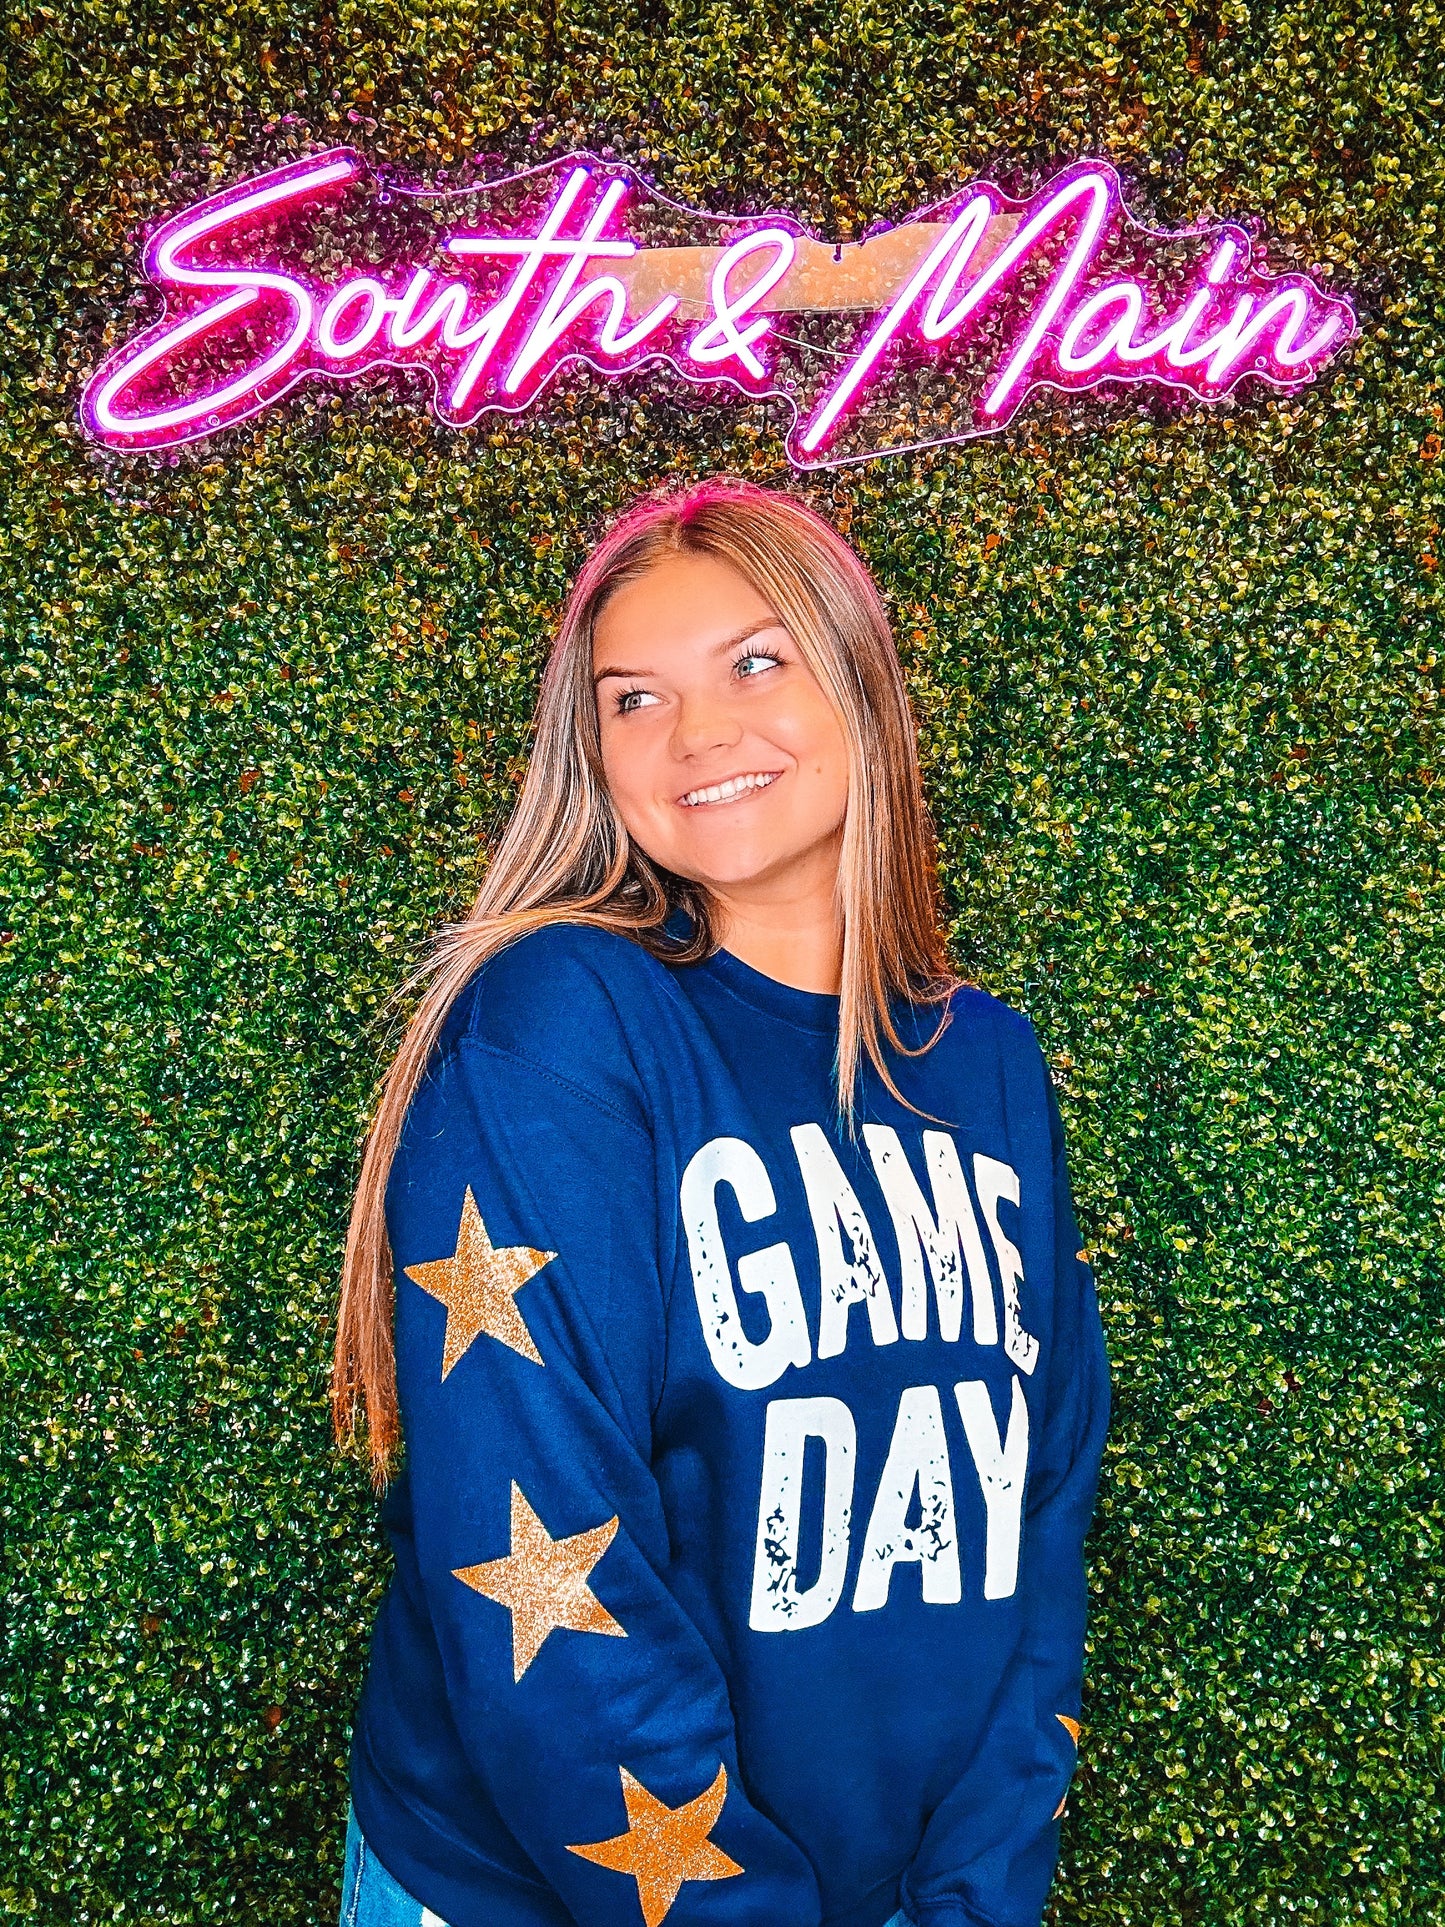 GAME DAY w/ Gold Stars Sweatshirt